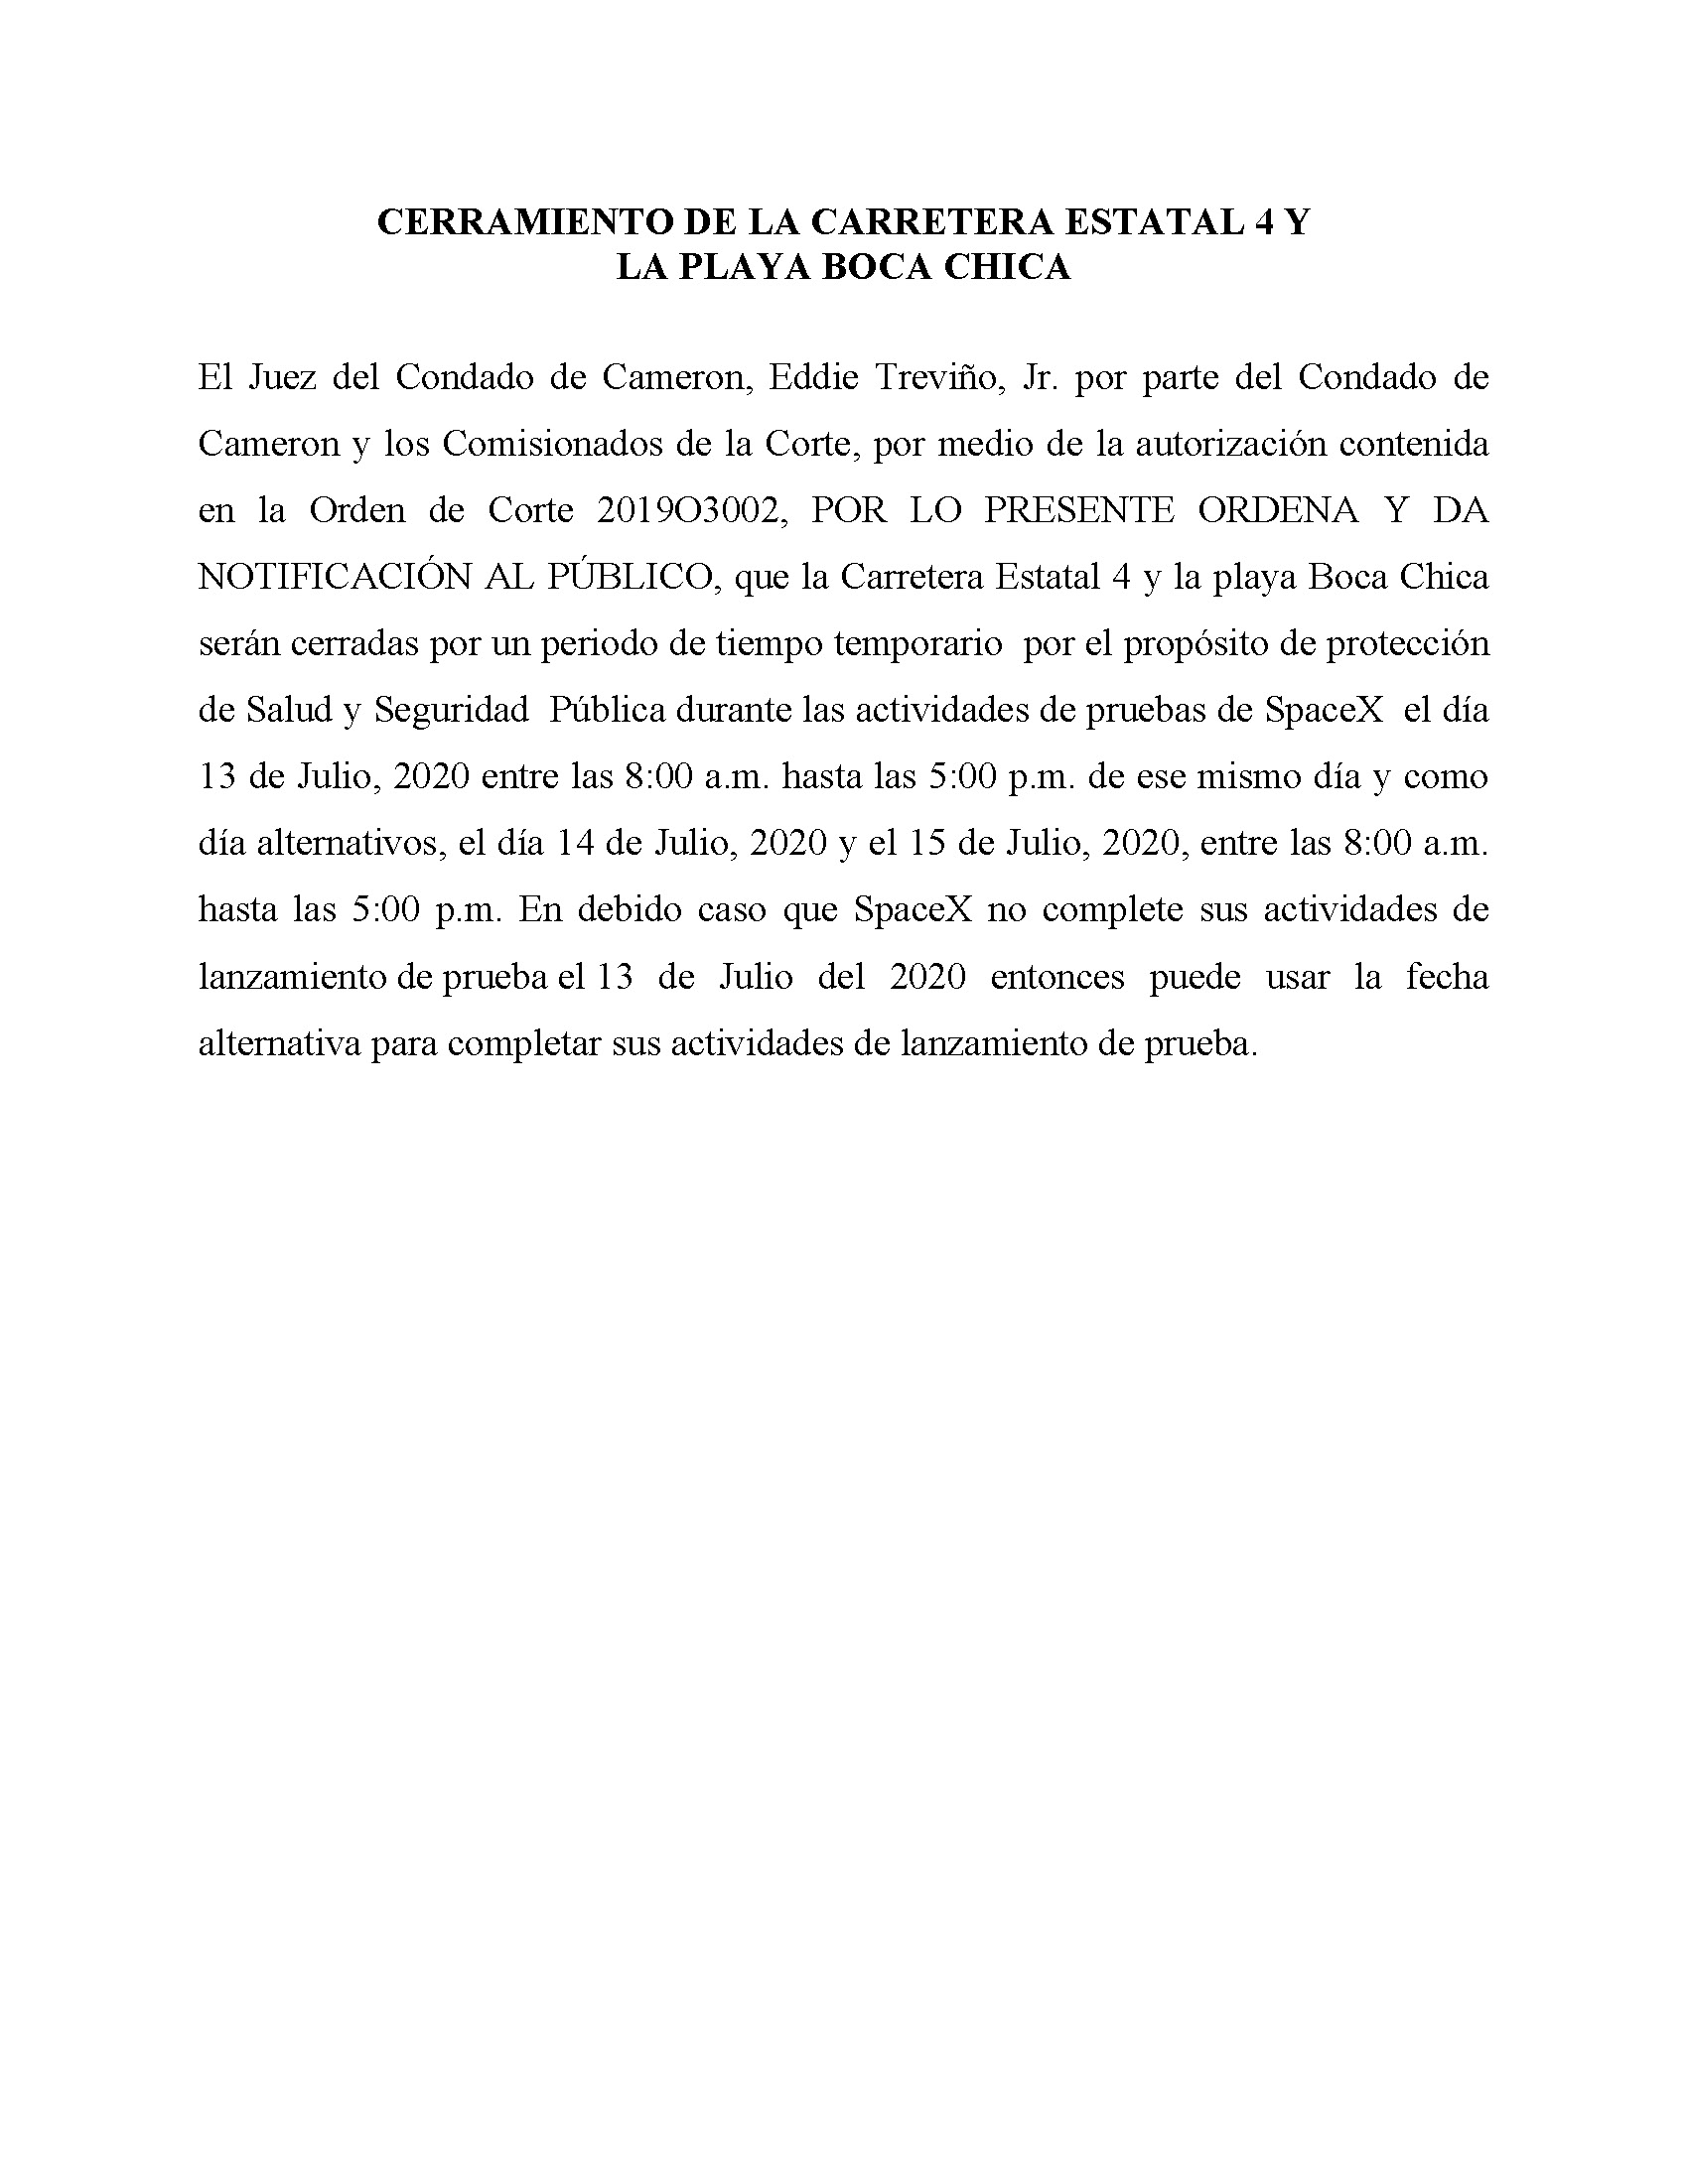 ORDER.CLOSURE OF HIGHWAY 4 Y LA PLAYA BOCA CHICA.SPANISH.07.13.20